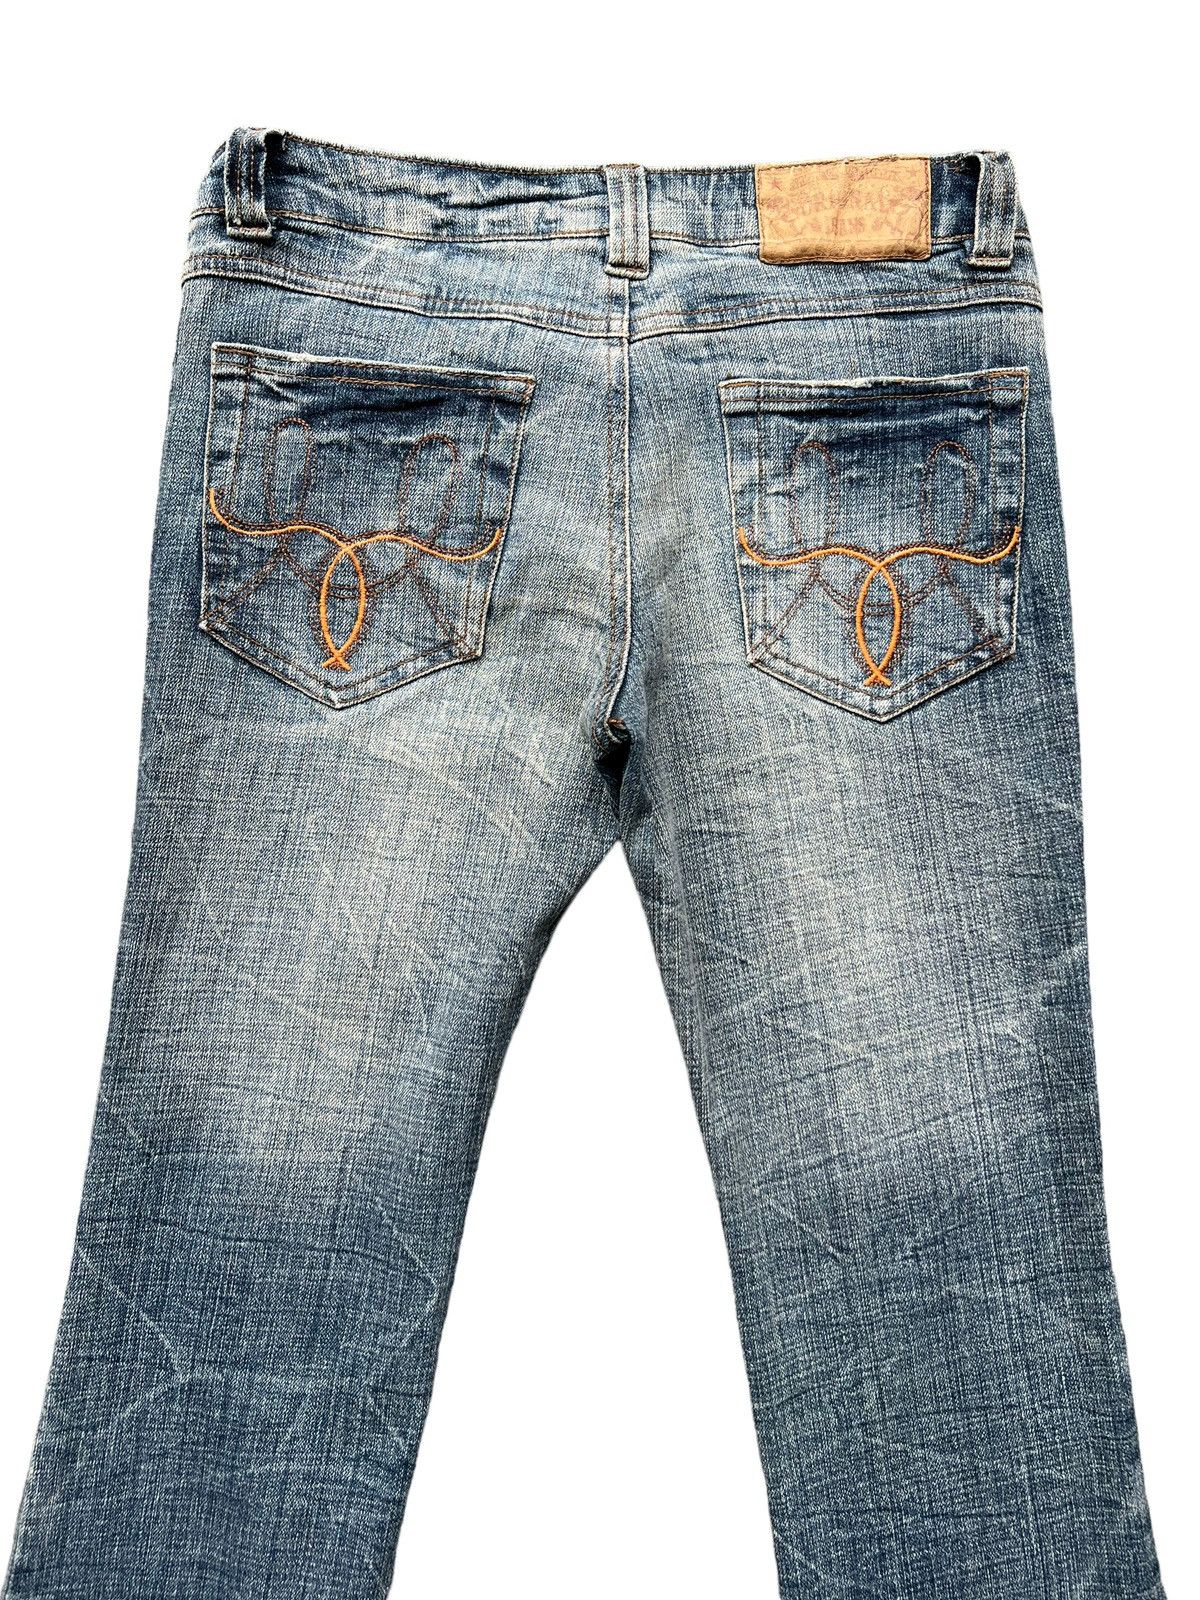 Hype - Vintage Standard Distressed Lowrise Flare Denim Jeans 29x32 - 5